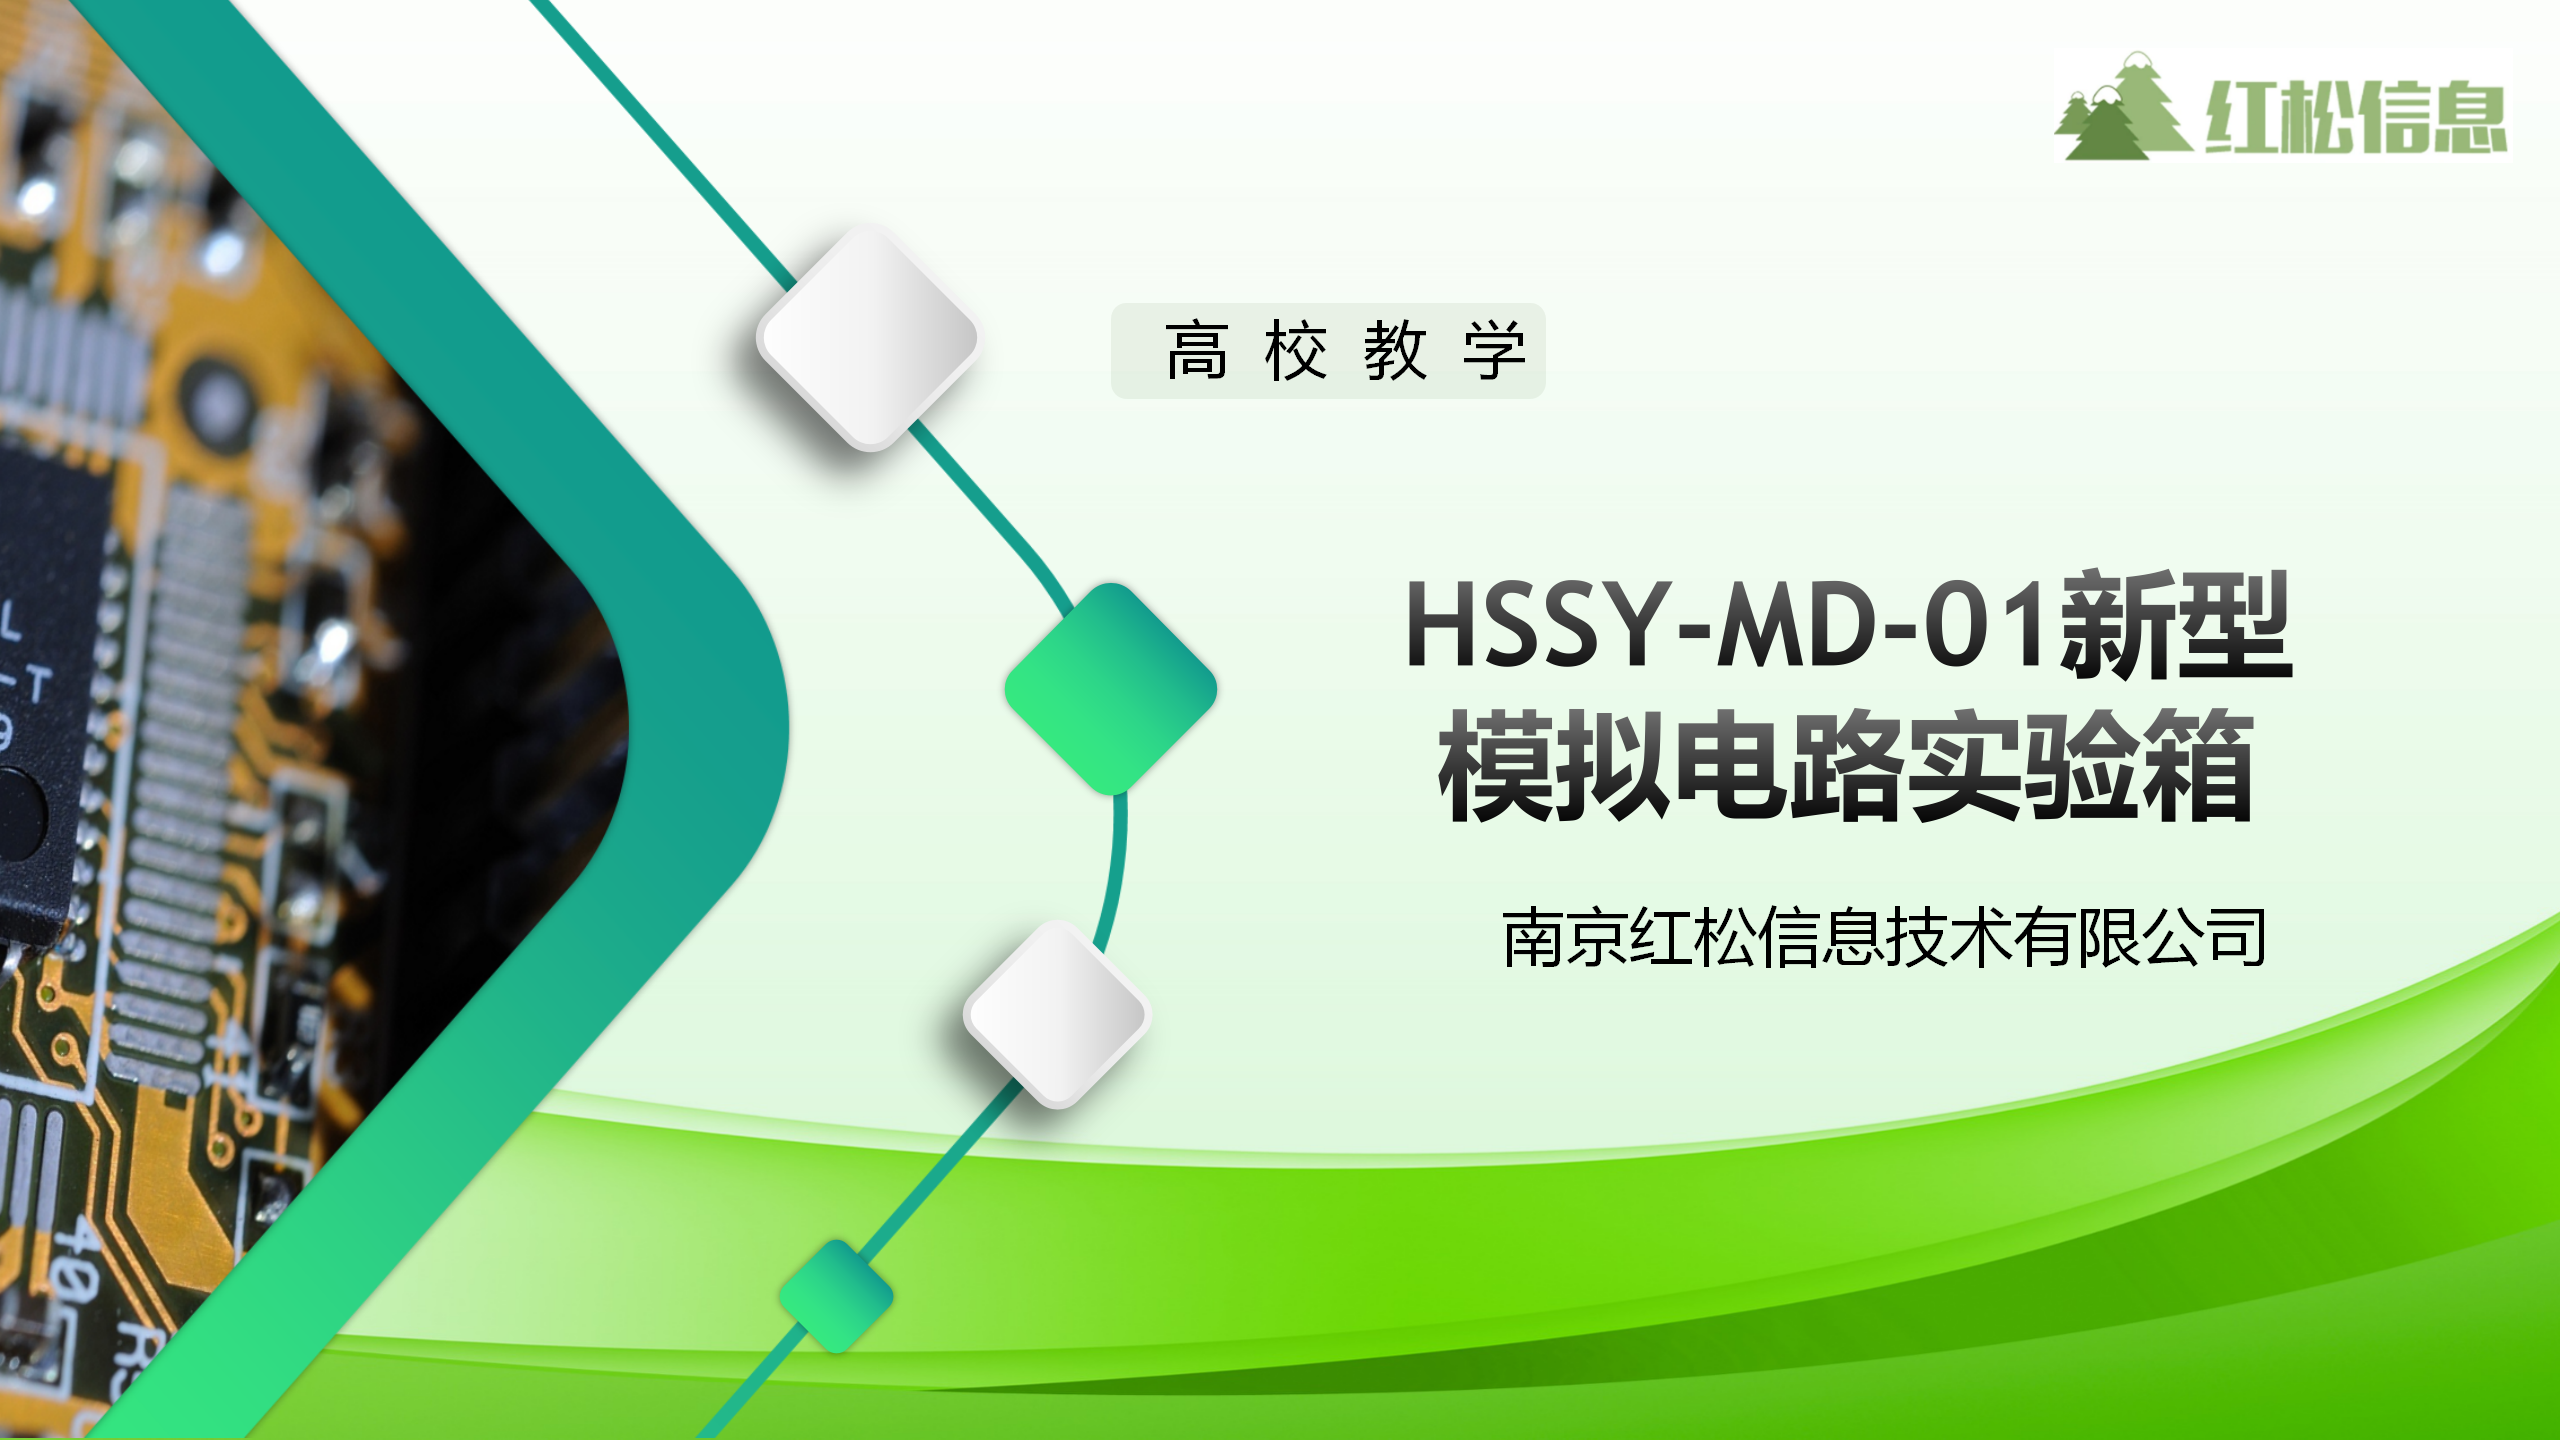 HSSY-MD-01新型 模拟电路实验箱